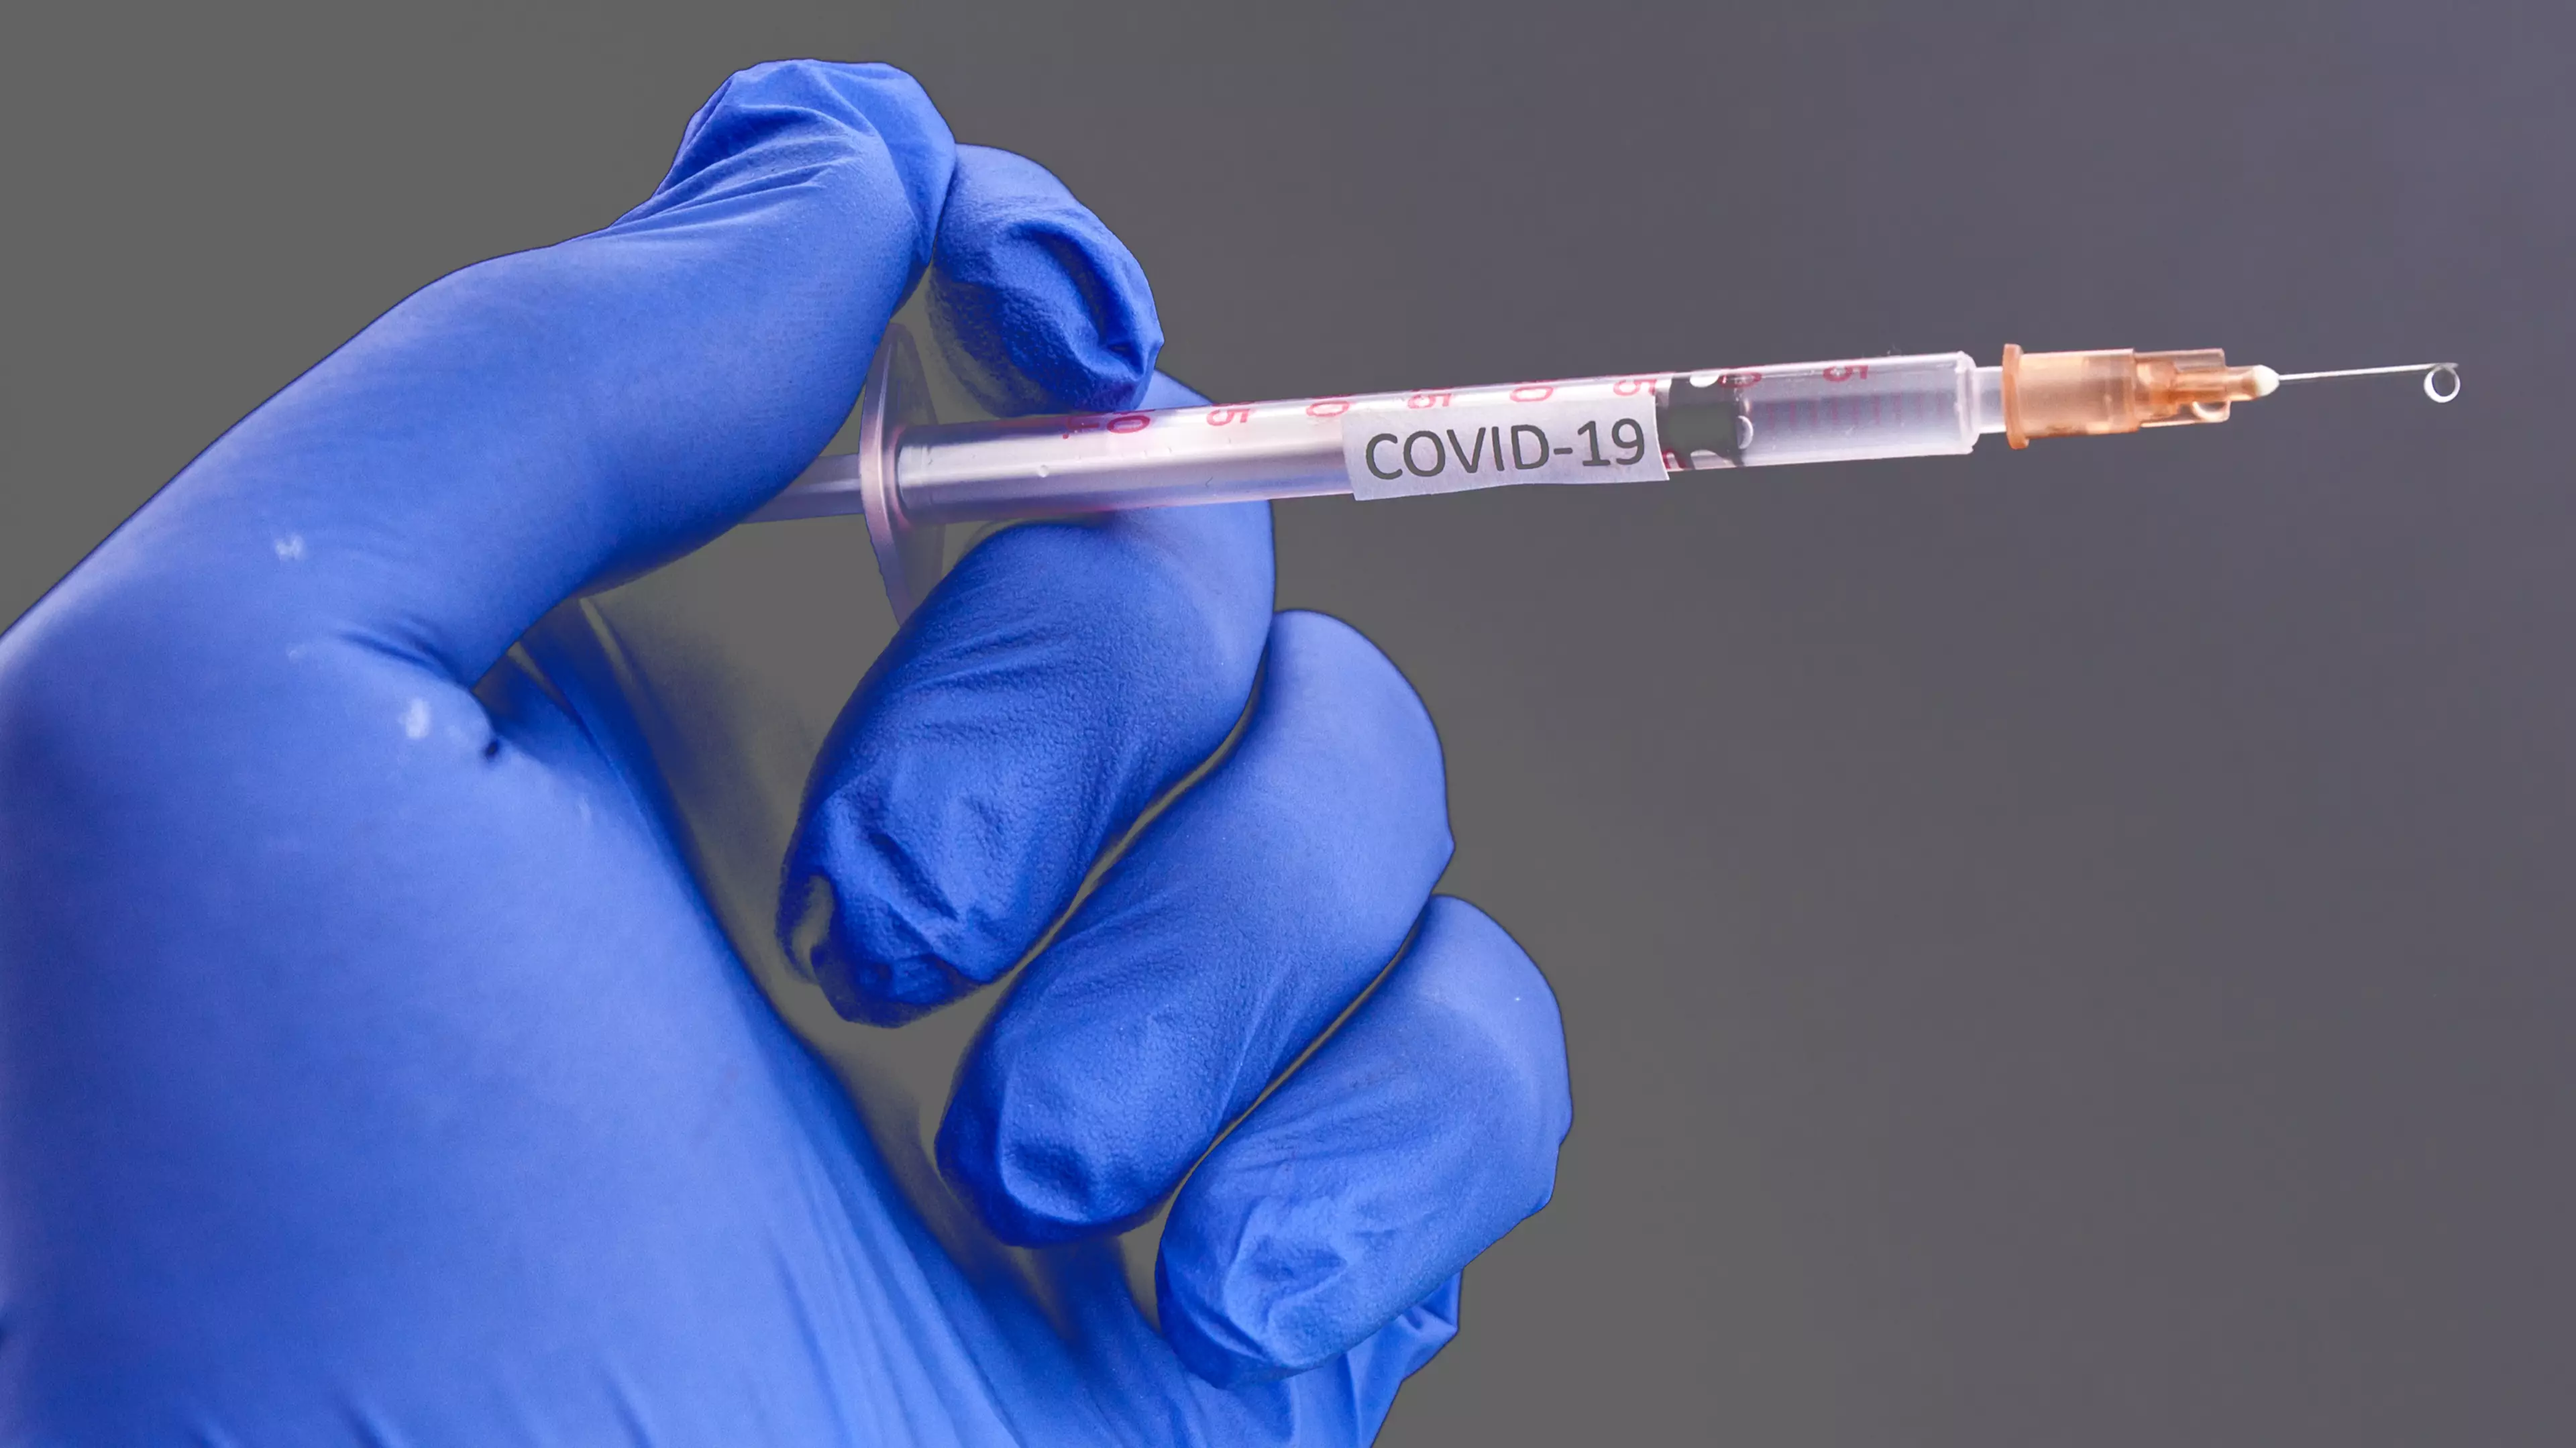 Human Coronavirus Vaccine Trial Shows Signs Of Creating Immunity